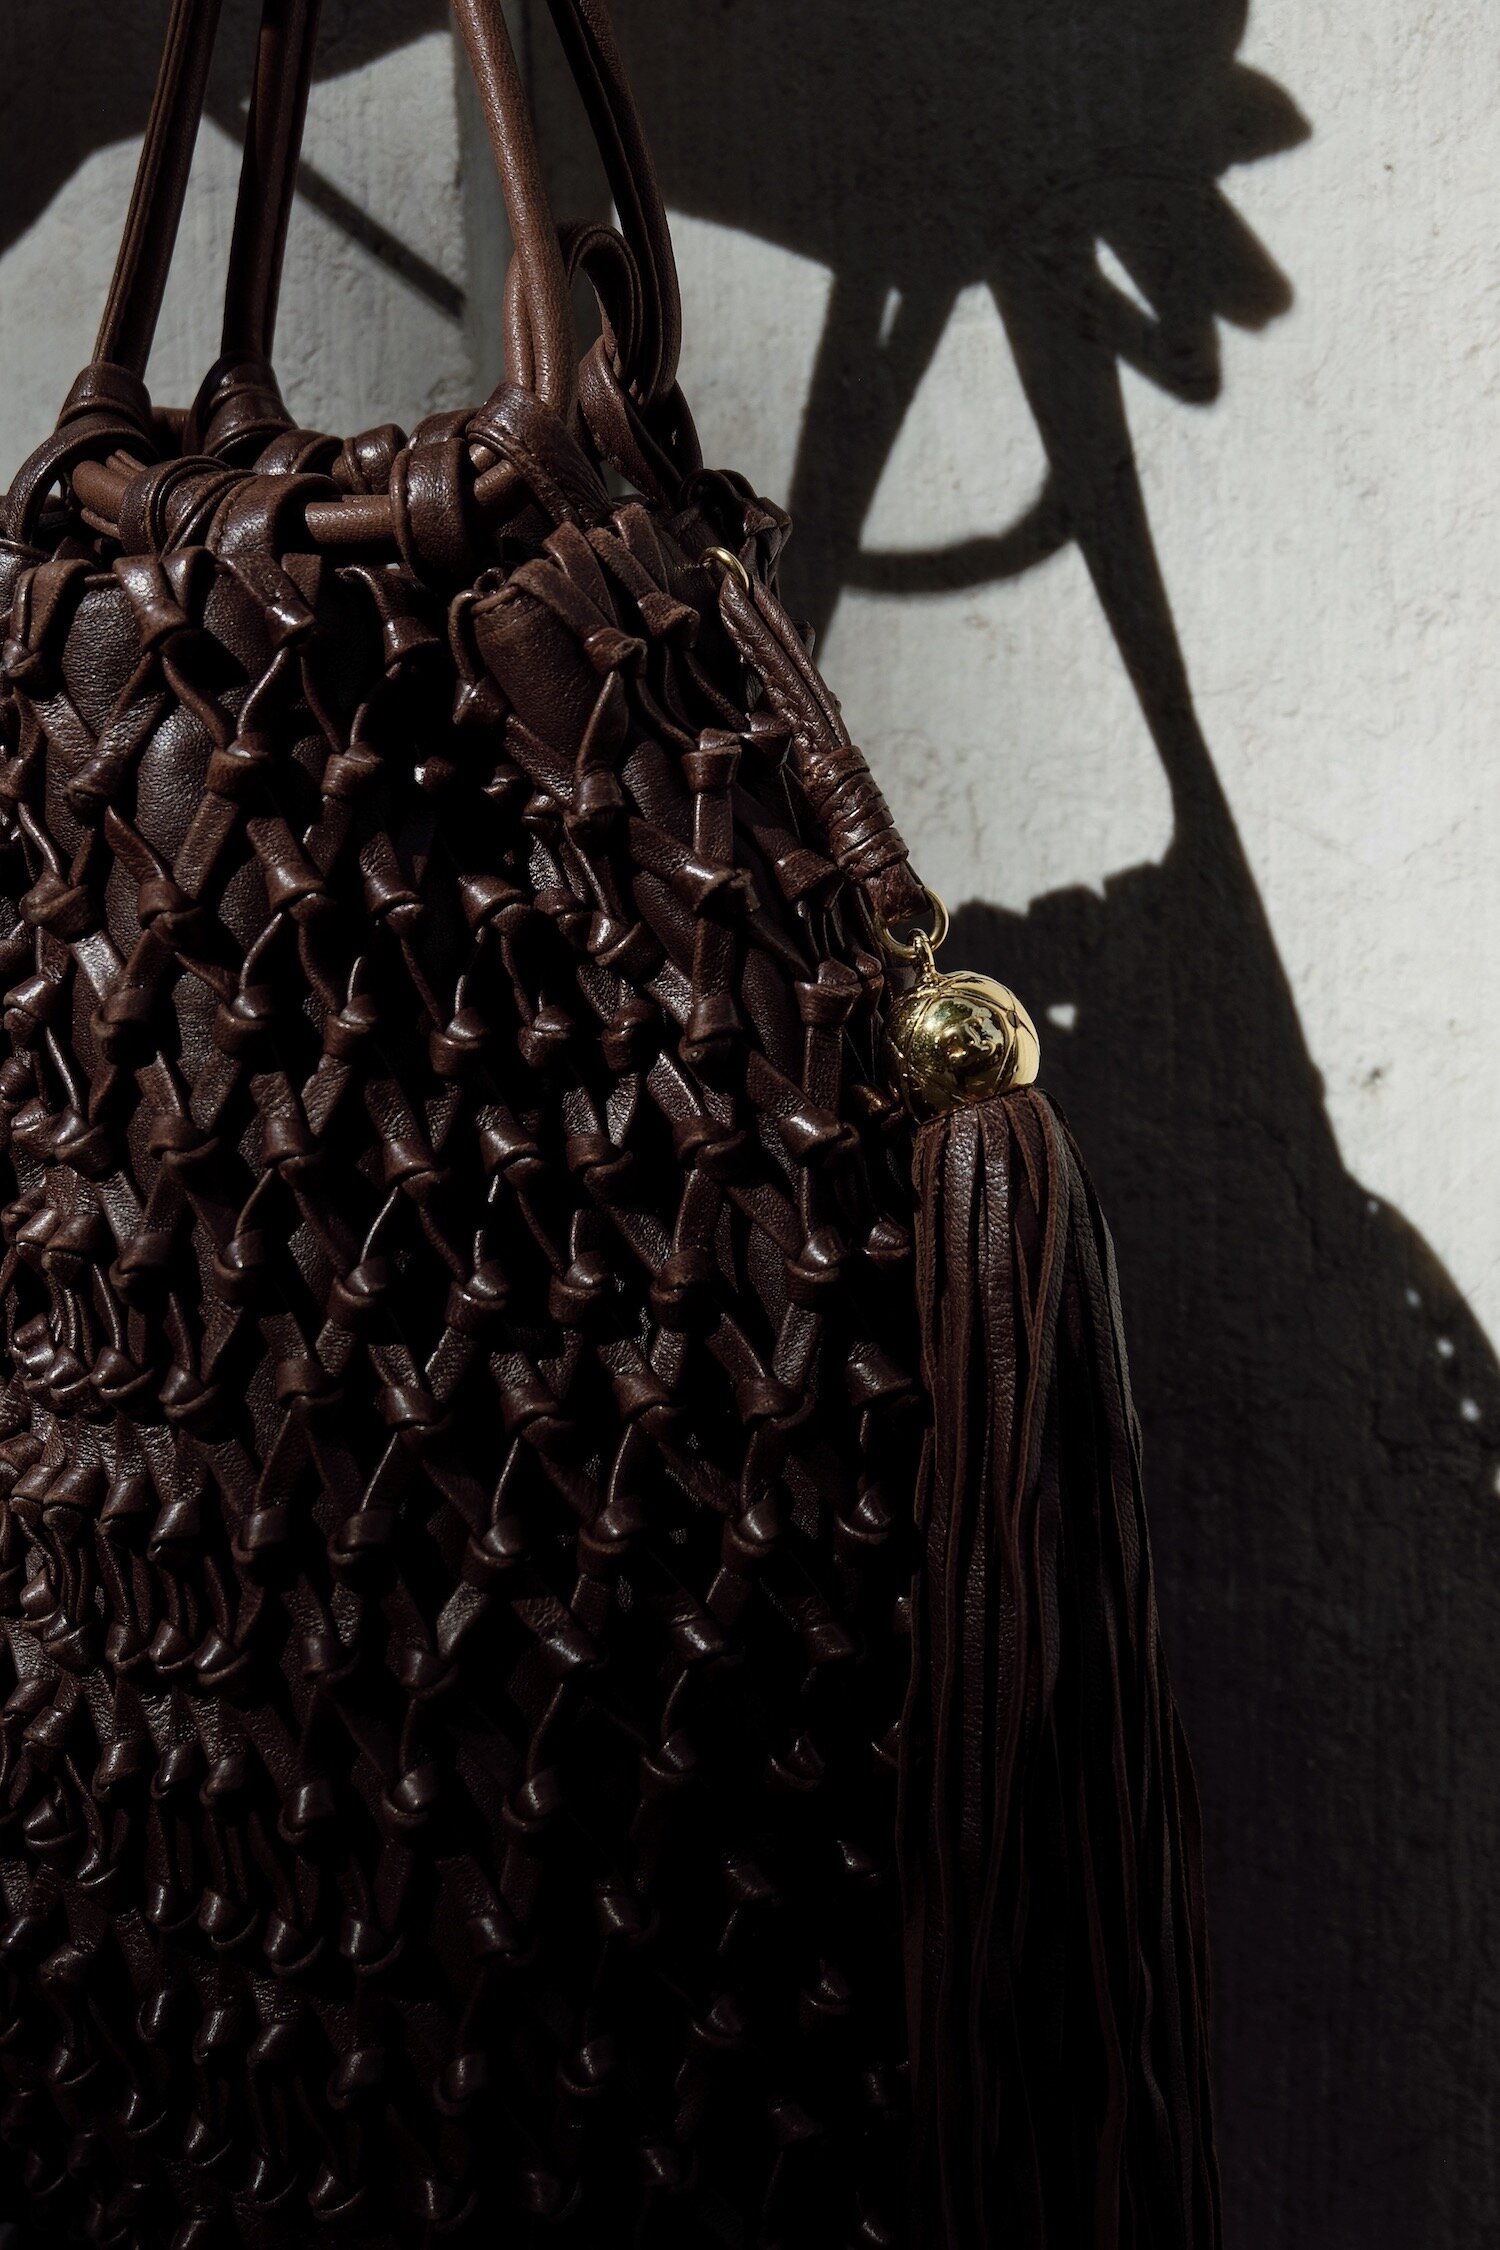 chanel brown purse